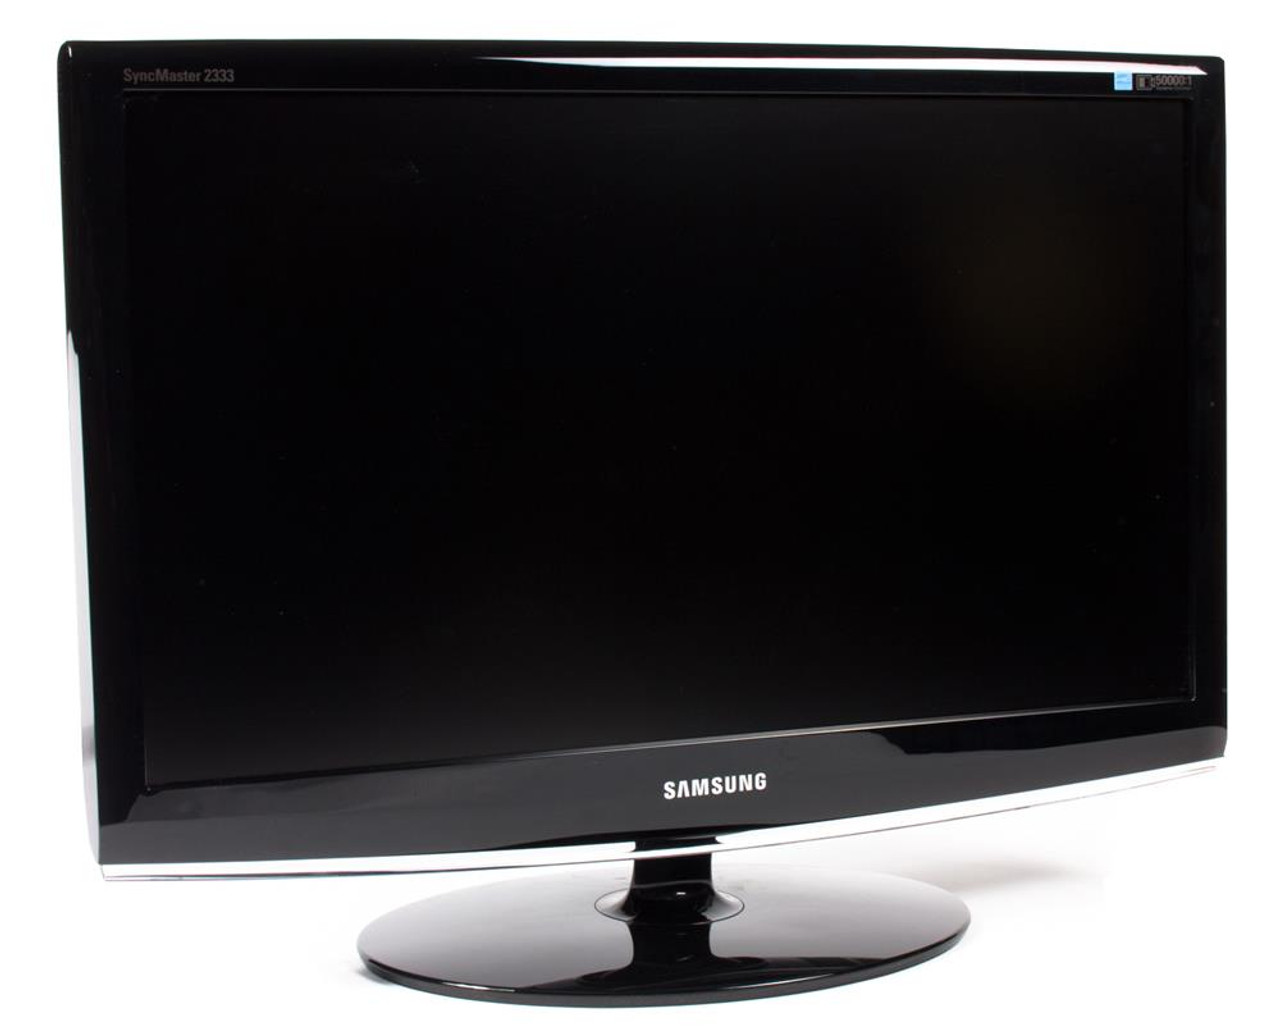 2333T - Samsung SyncMaster 2333T 23 LCD Monitor 8 ms Adjustable Display Angle 1920 x 1080 16.7 Million Colors 300 Nit 50000:1 DVI VGA Black Energy